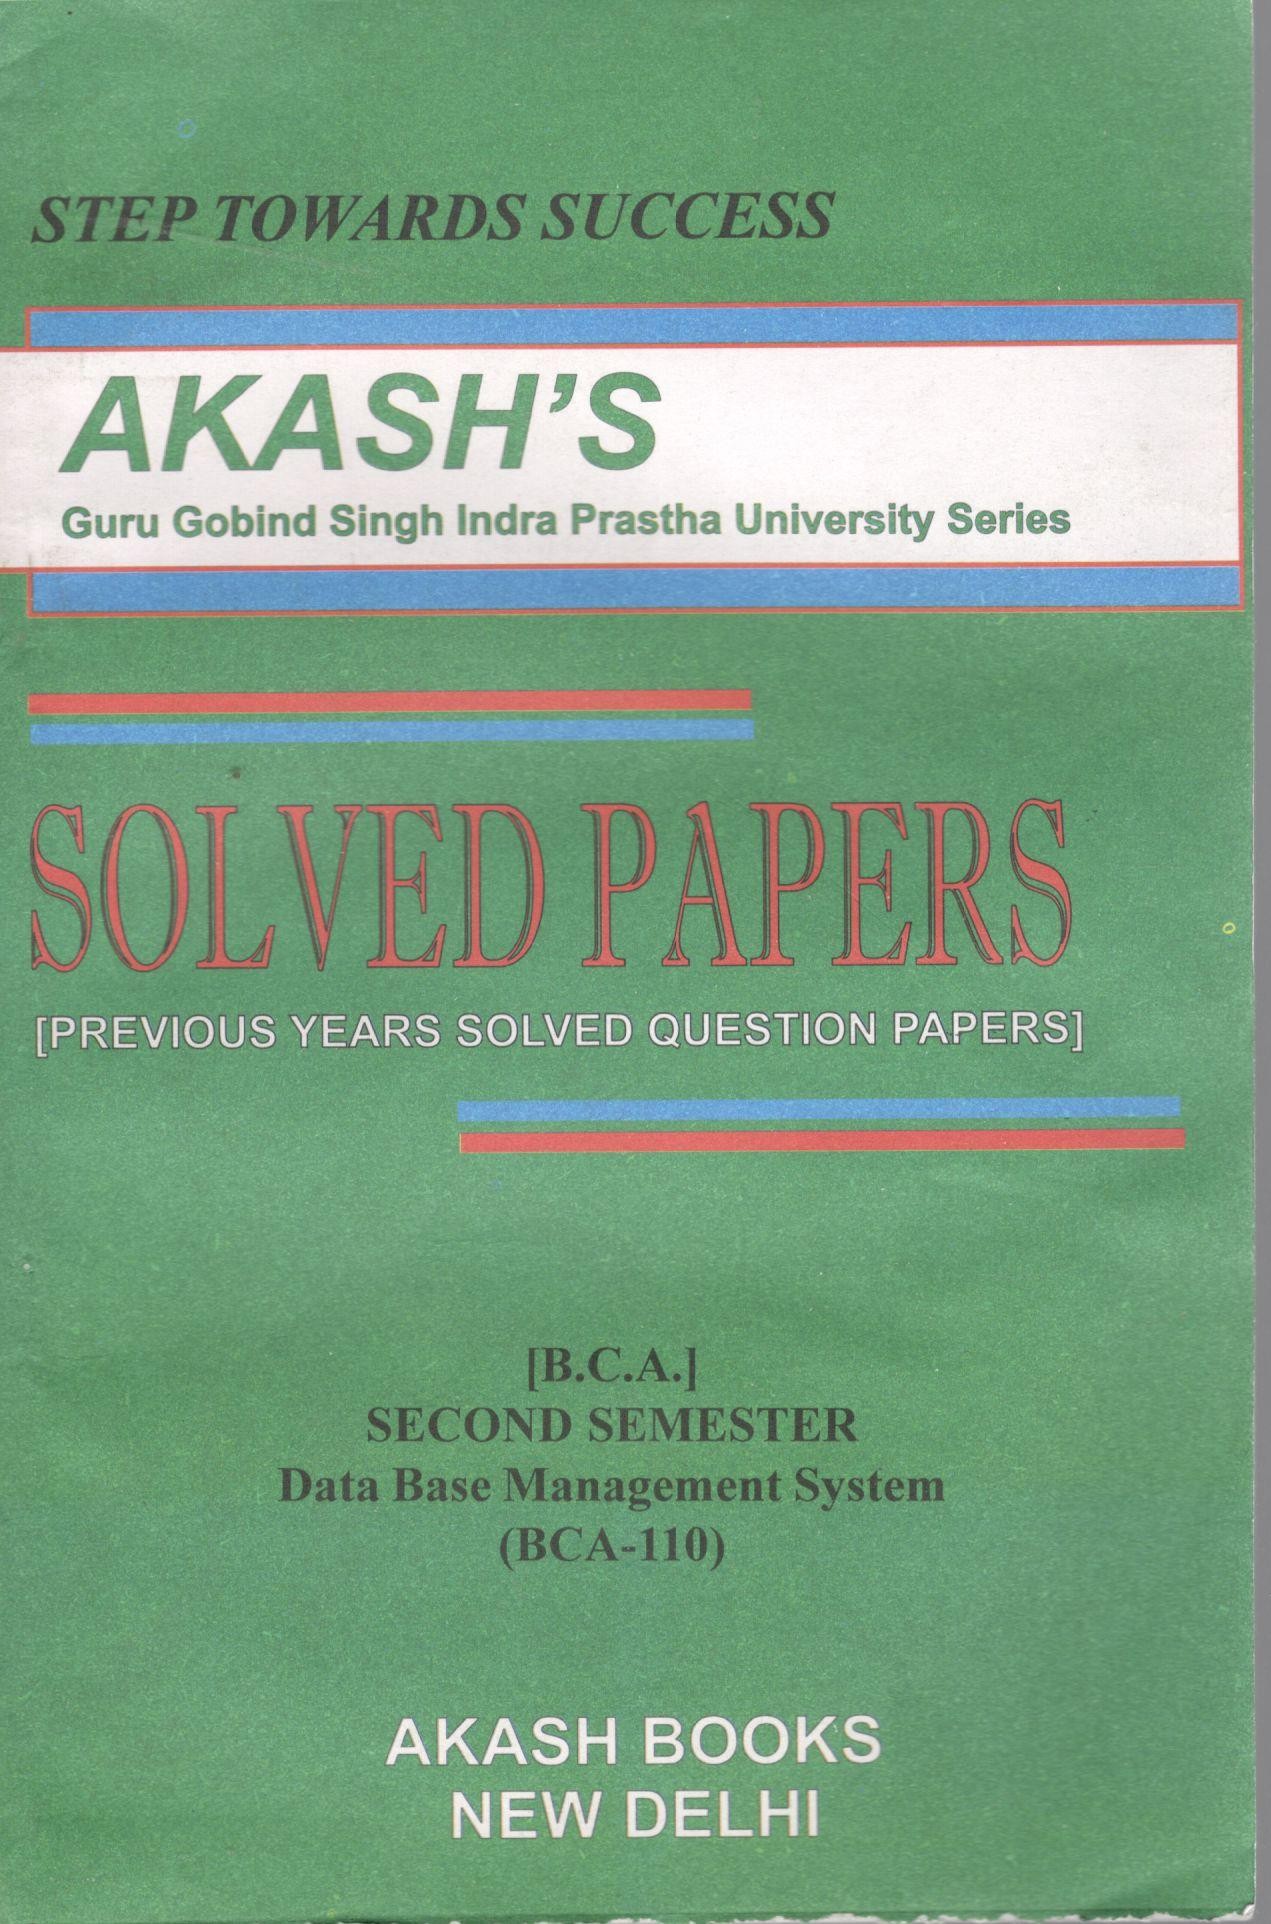 Akash Books Ipu Pdf